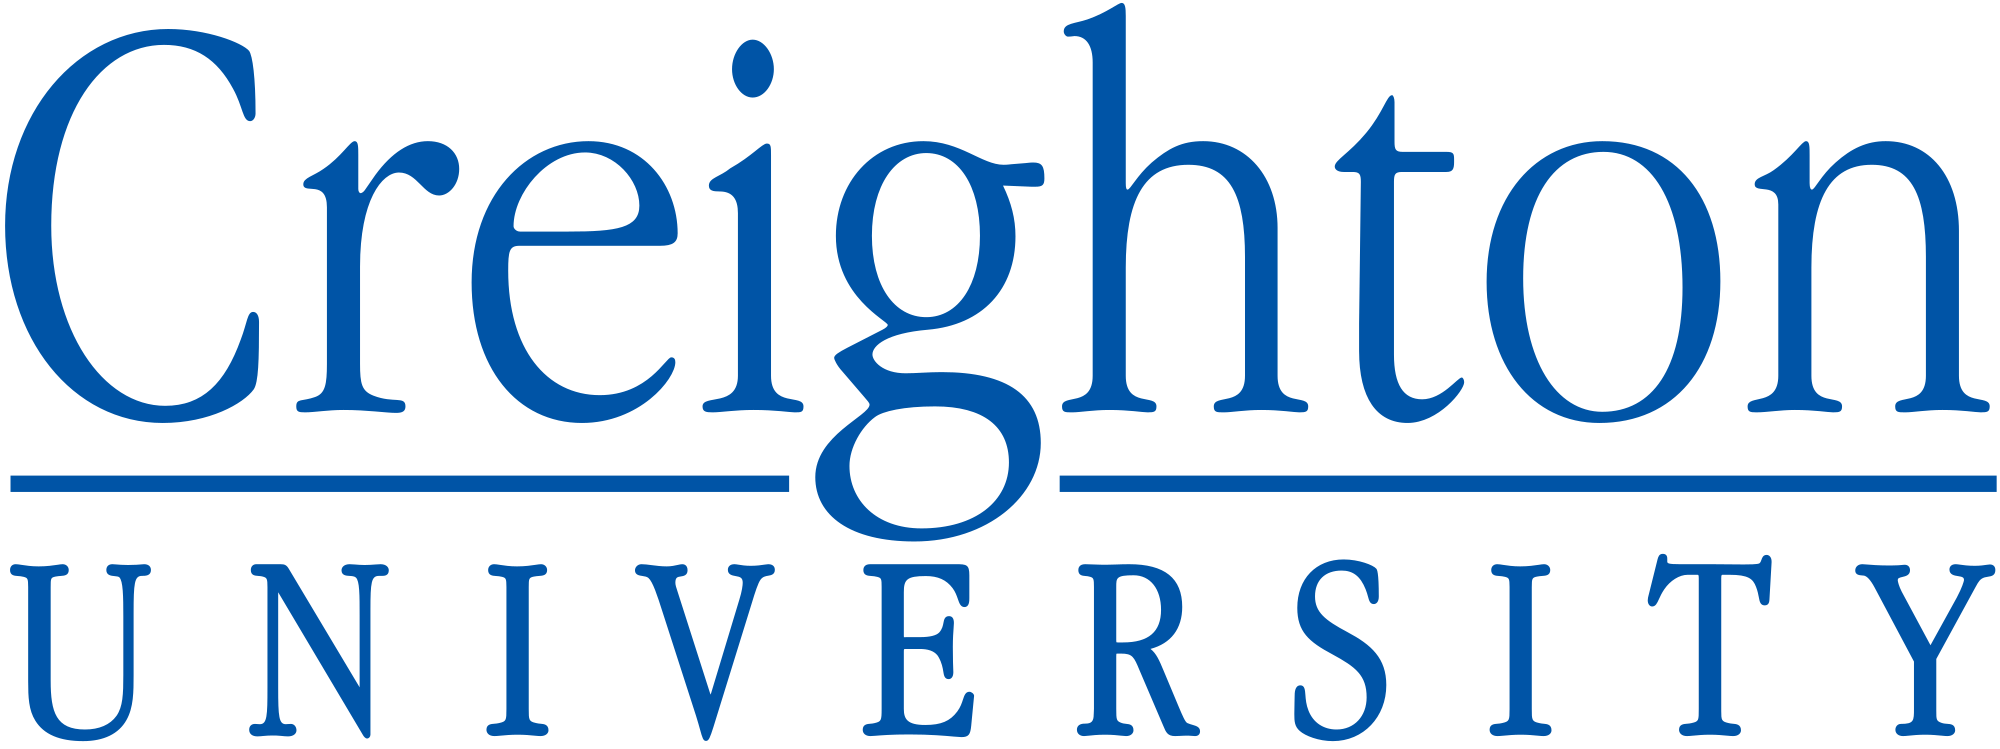 Creighton Logo - File:Creighton University logo.svg - Wikimedia Commons